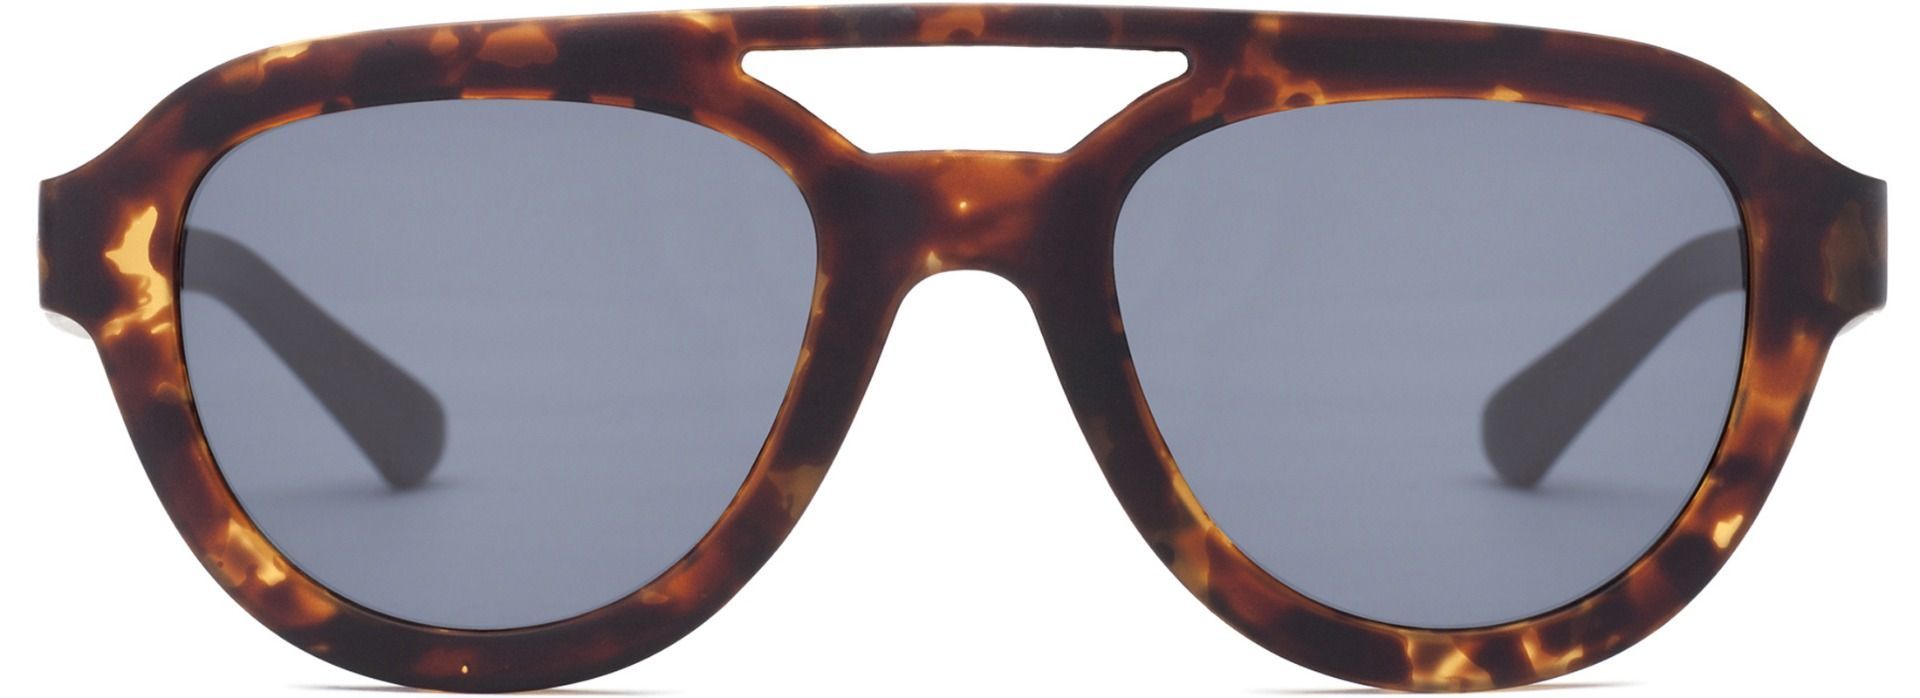 aor025 solbriller Extra Optical